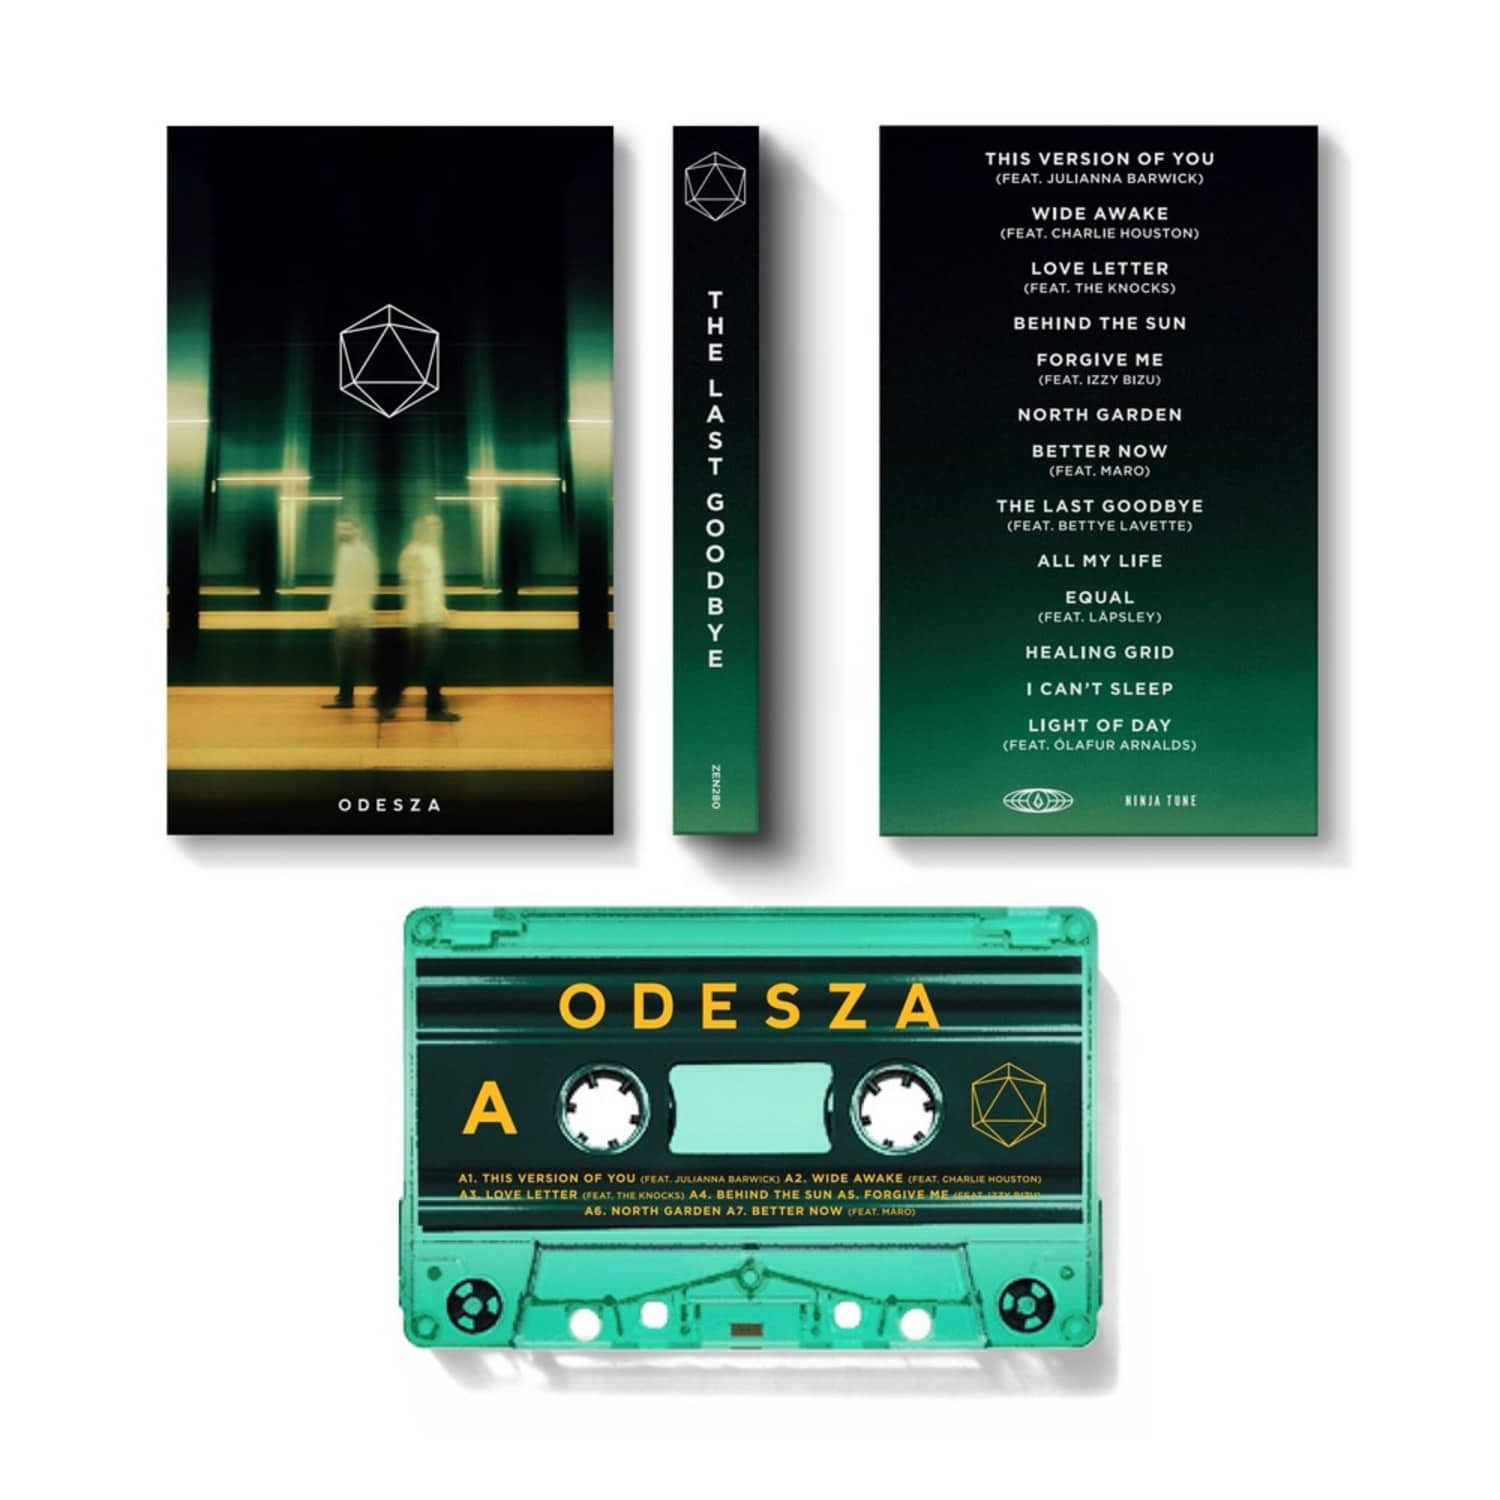 Odesza - THE LAST GOODBYE 